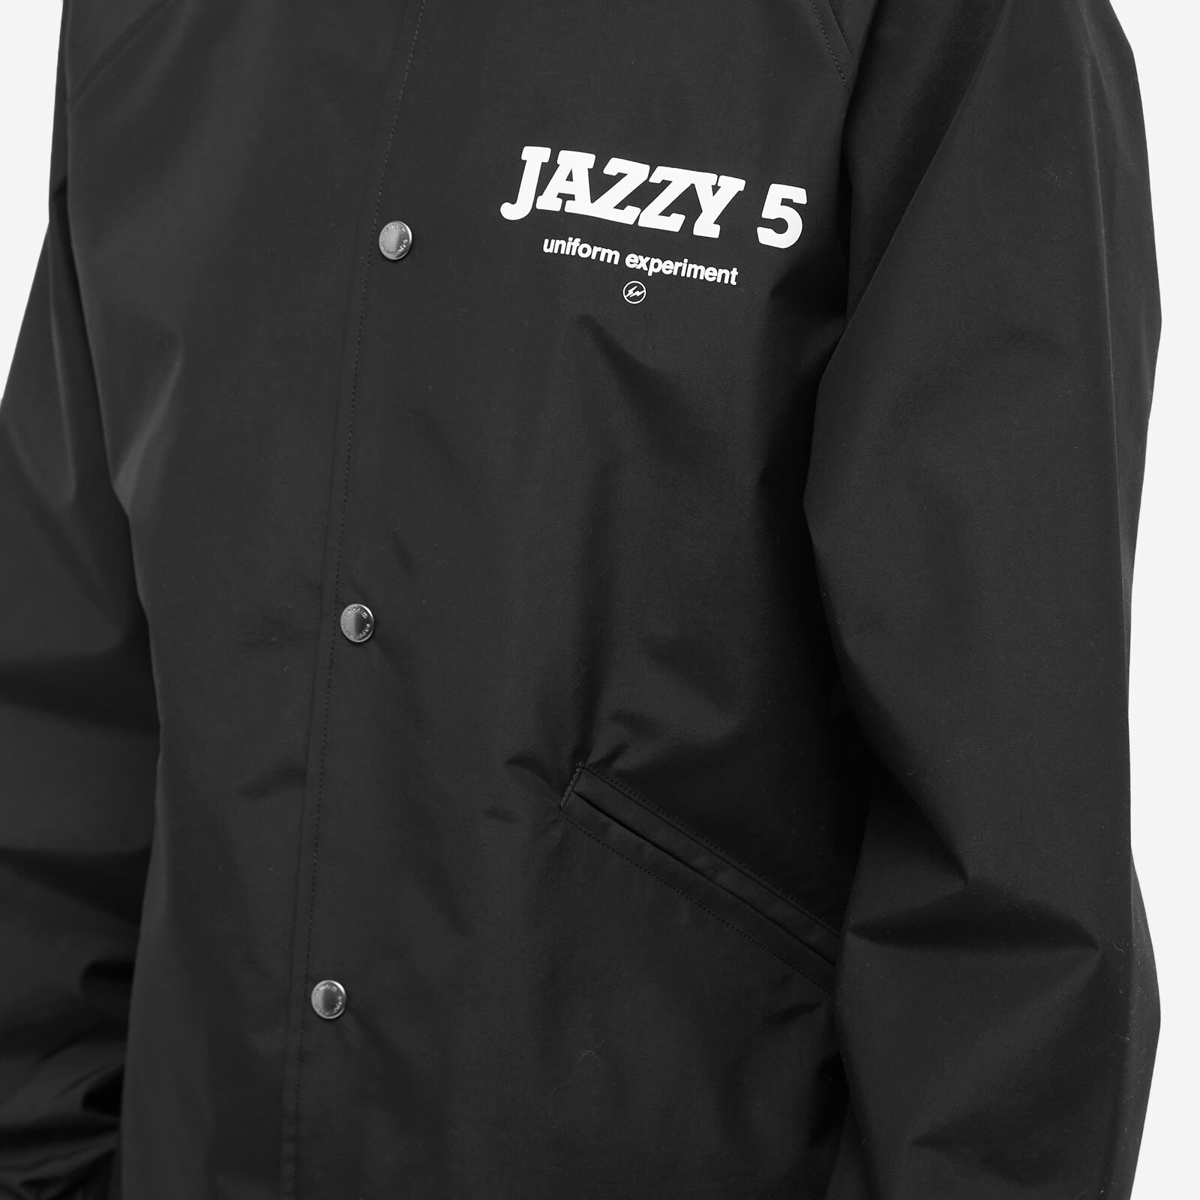 Uniform Experiment Men's Fragment Jazzy Jay 5 Coach Jacket in